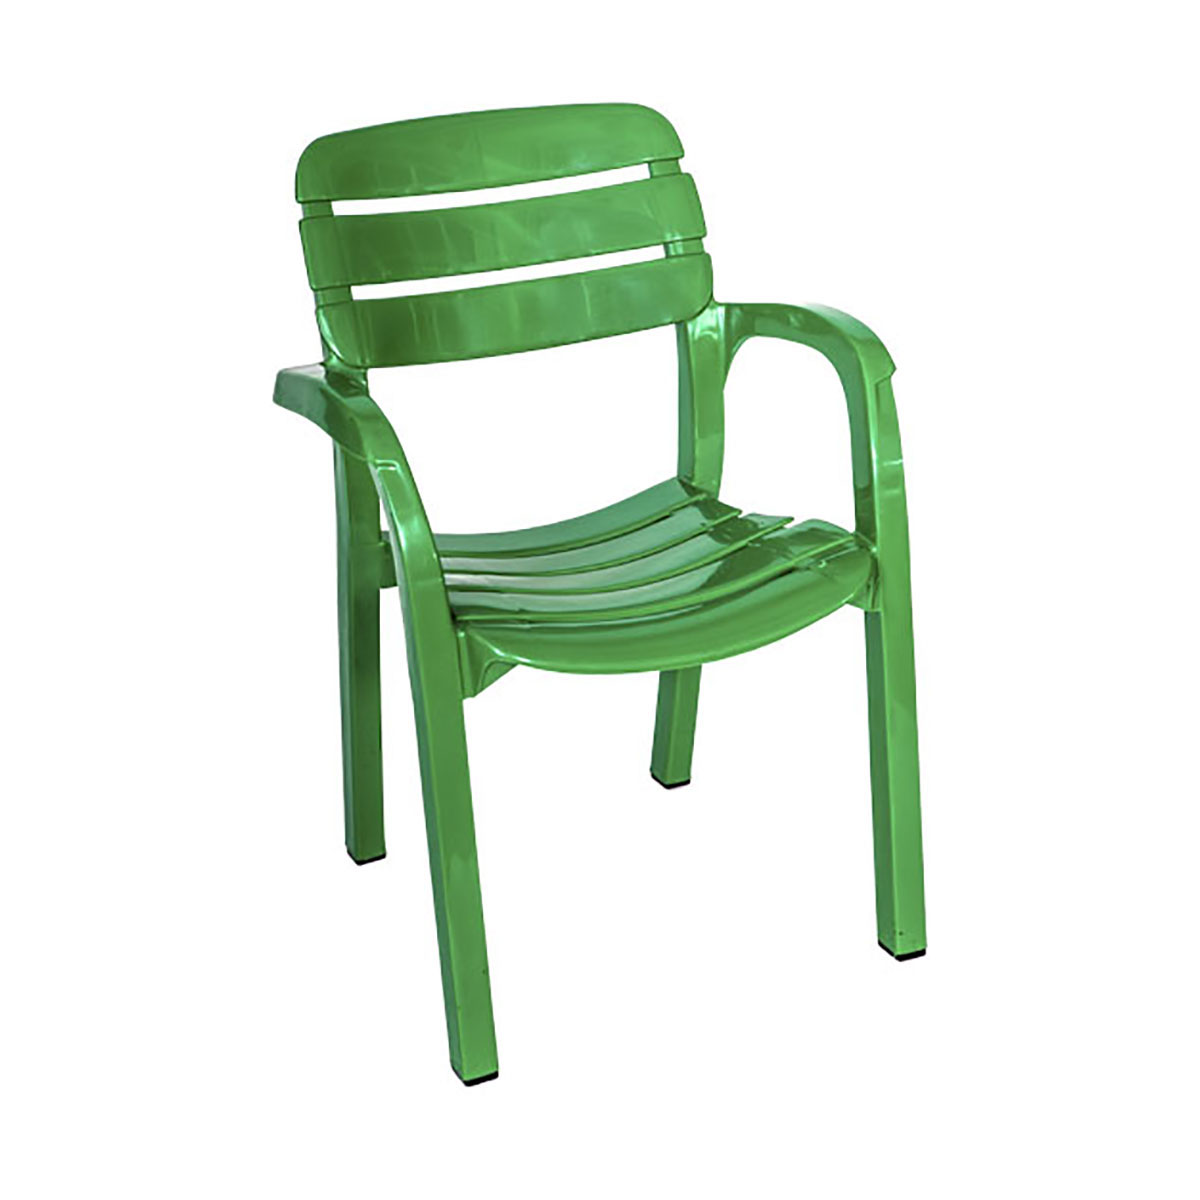 Садовое кресло Стандарт пластик Далгория 217477 44х60х83см зеленый